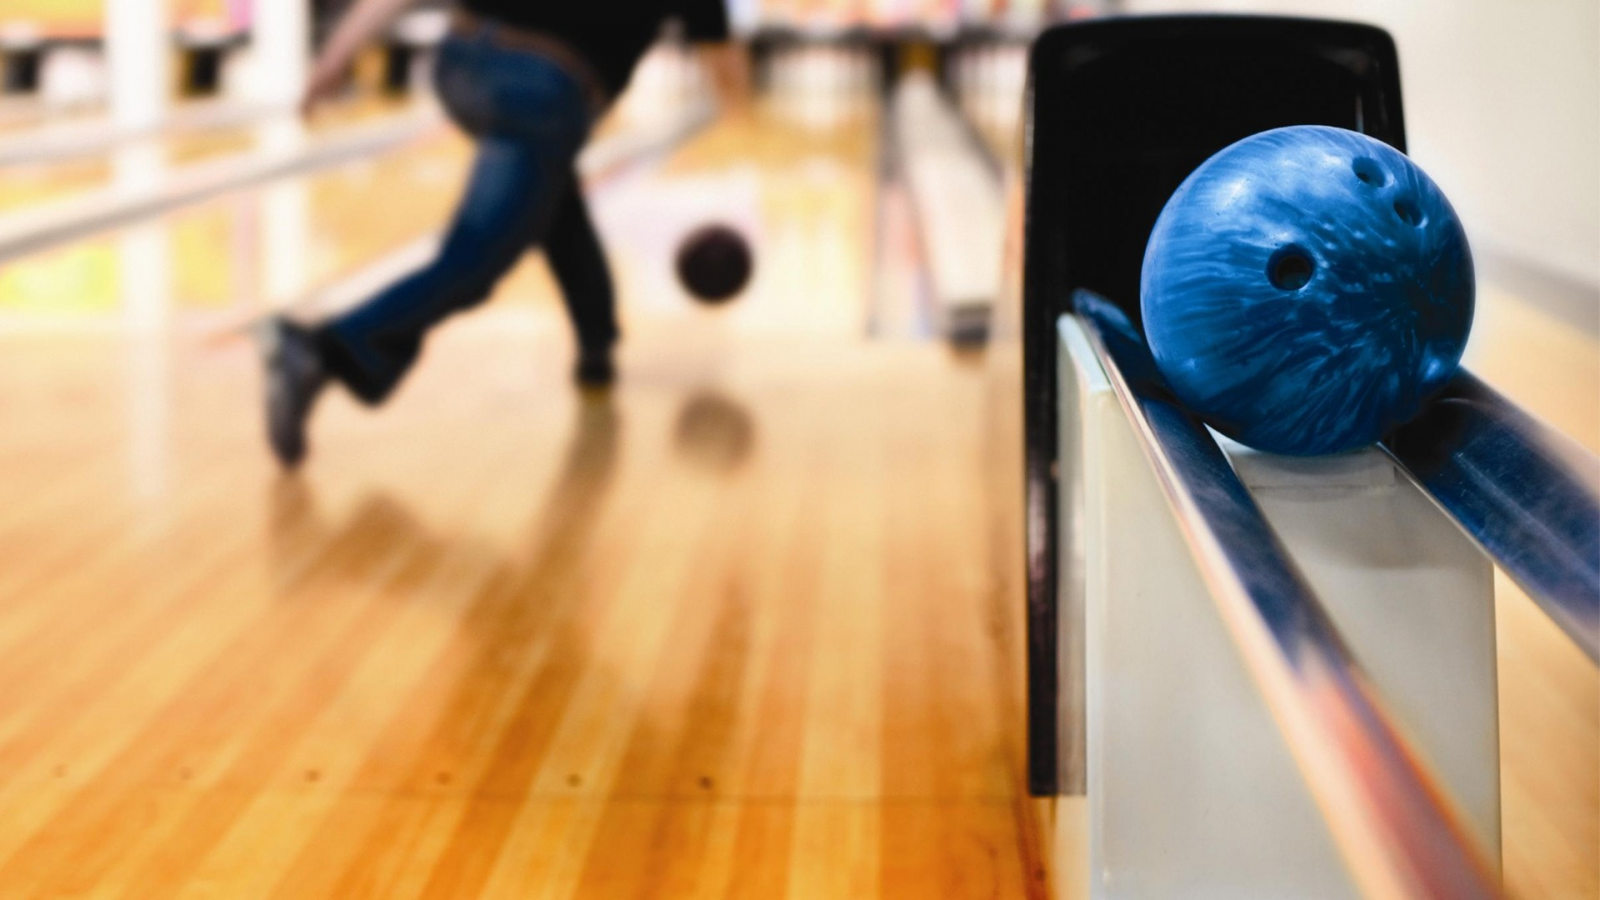 bowling, bowling ball, macro photography, bowling lane, боулинг, макросъемки, шар для боулинга